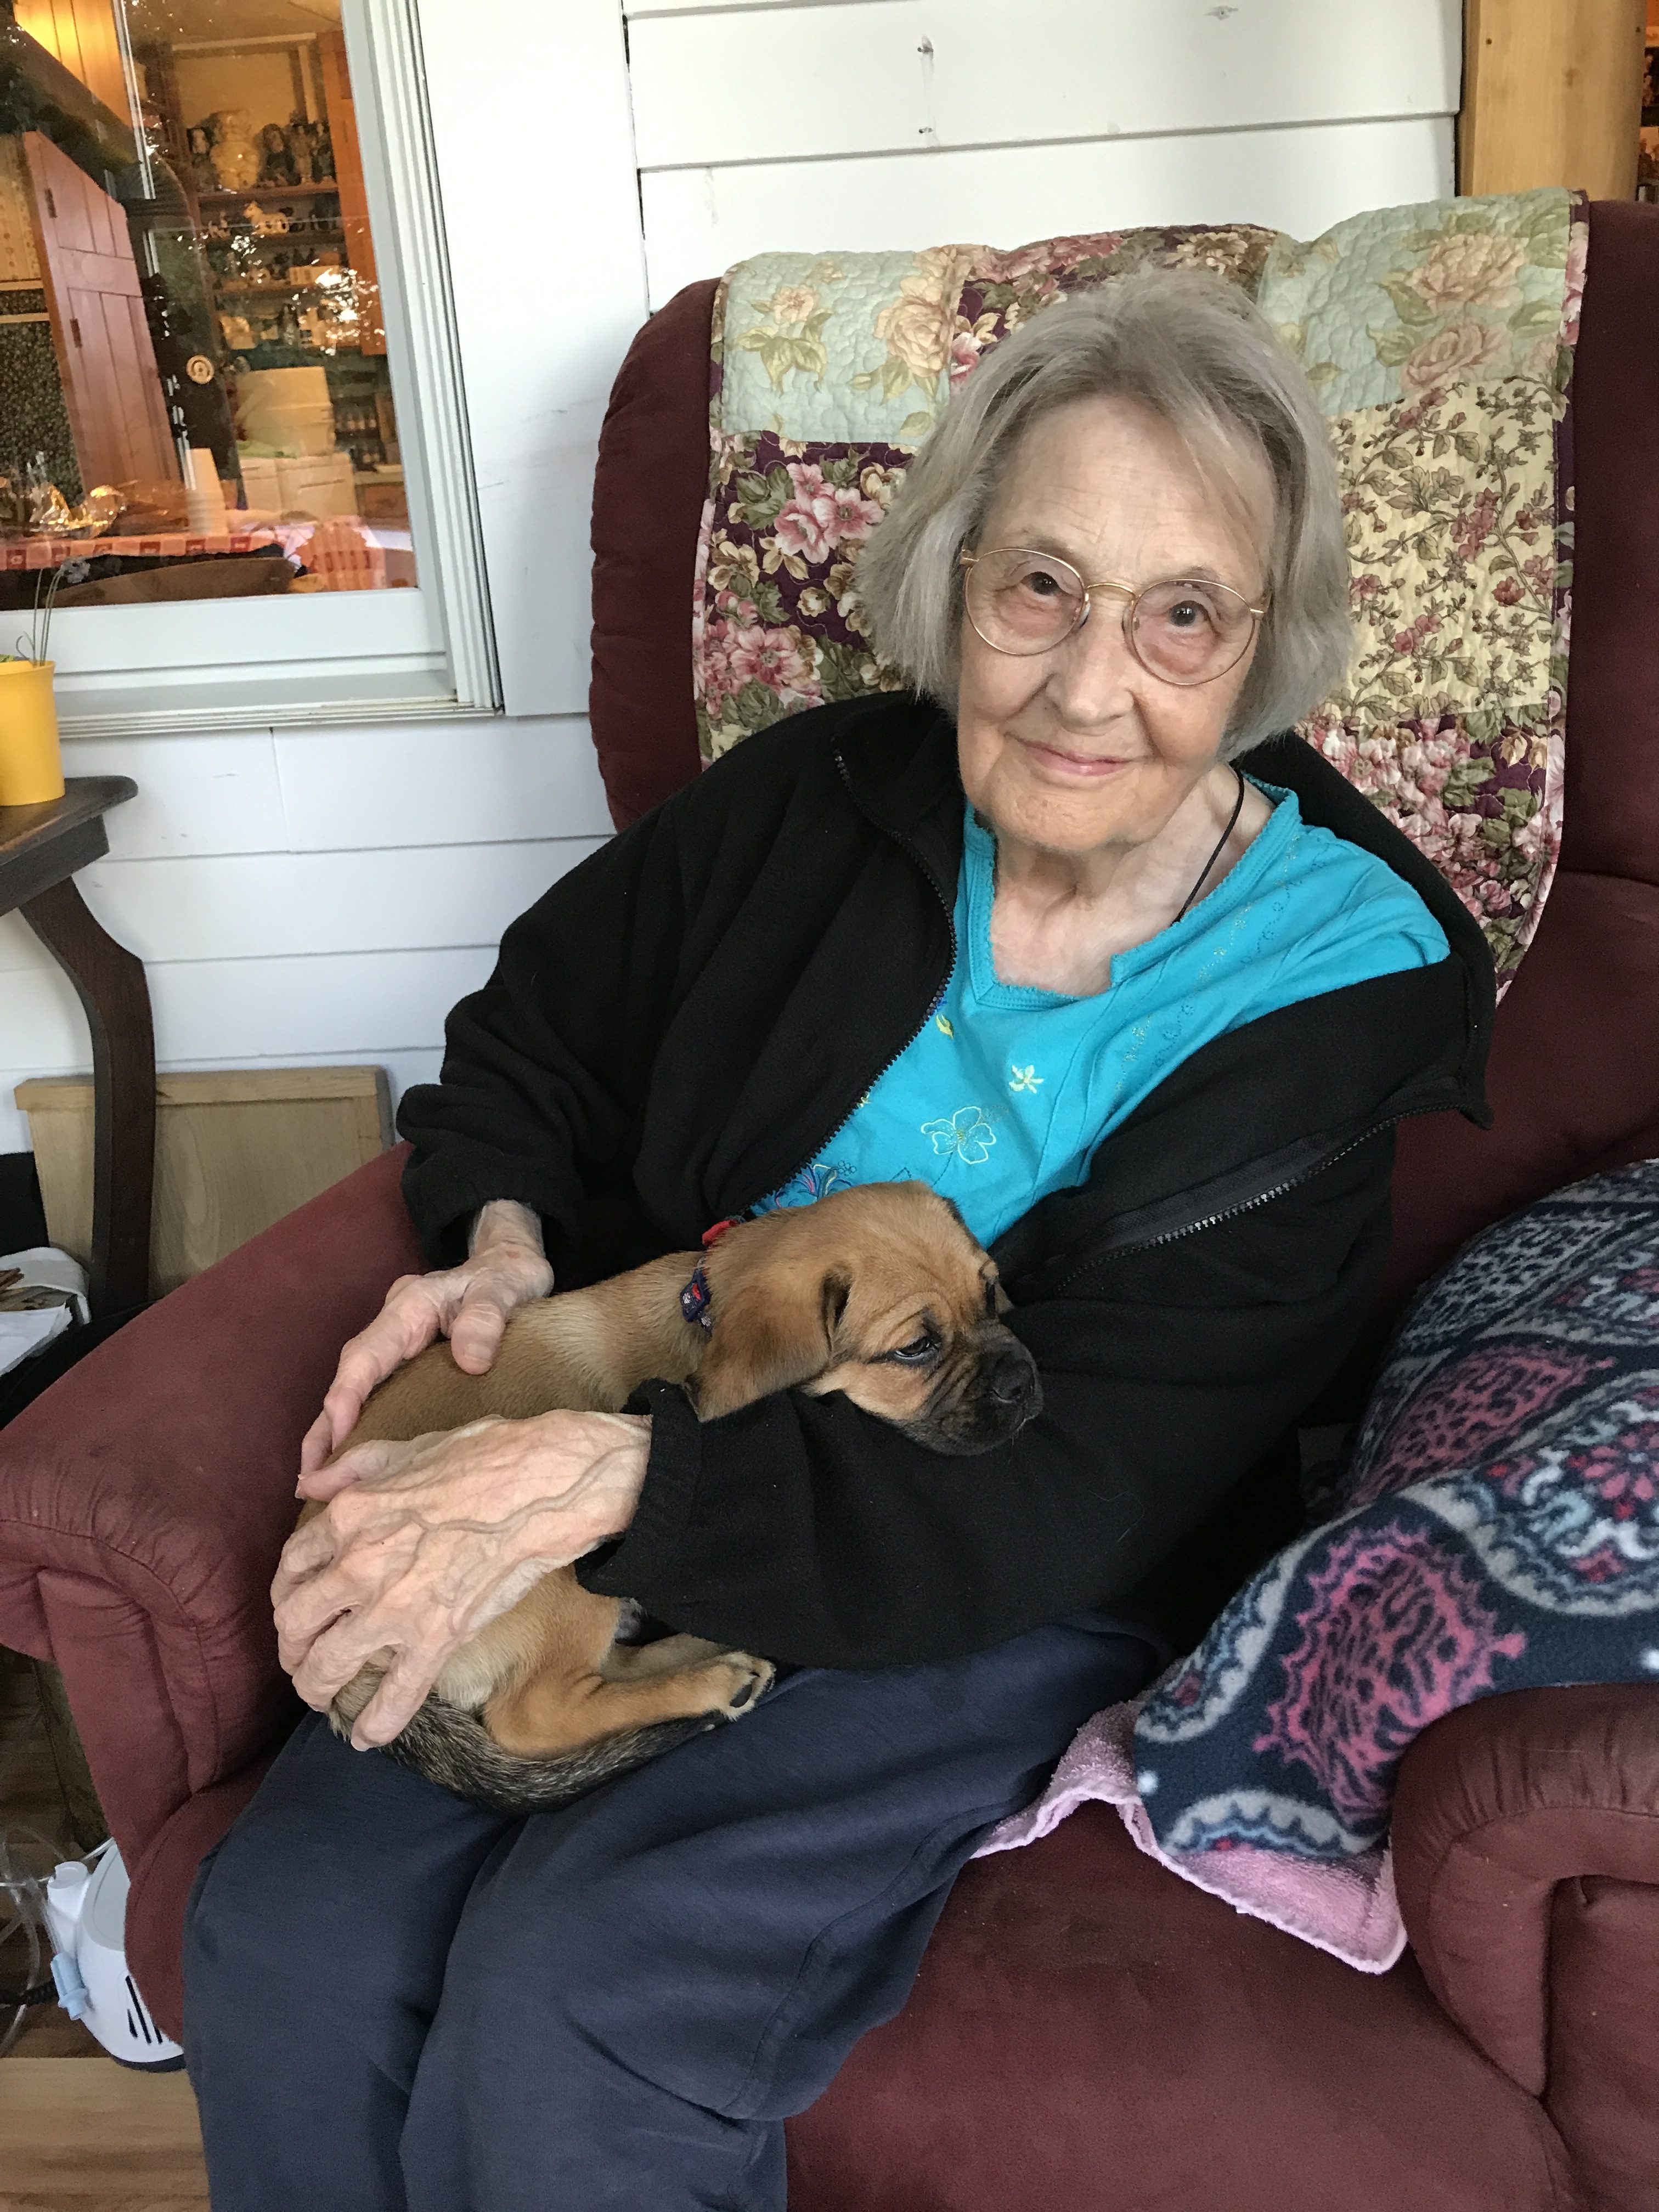 Grandma Holding a Puppy